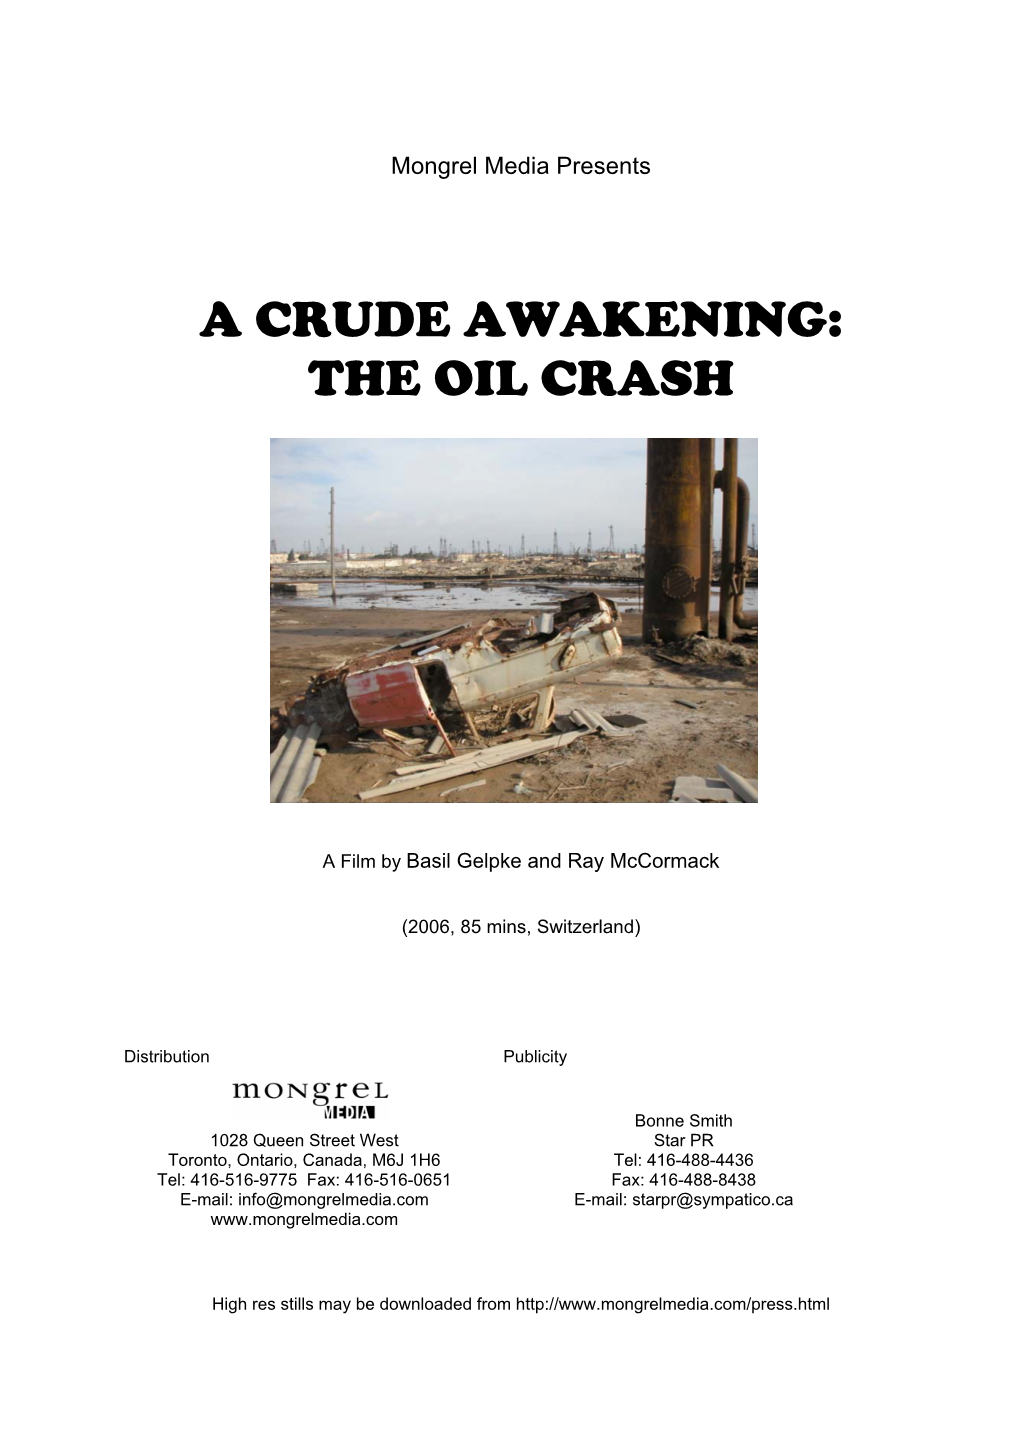 A Crude Awakening: the Oil Crash